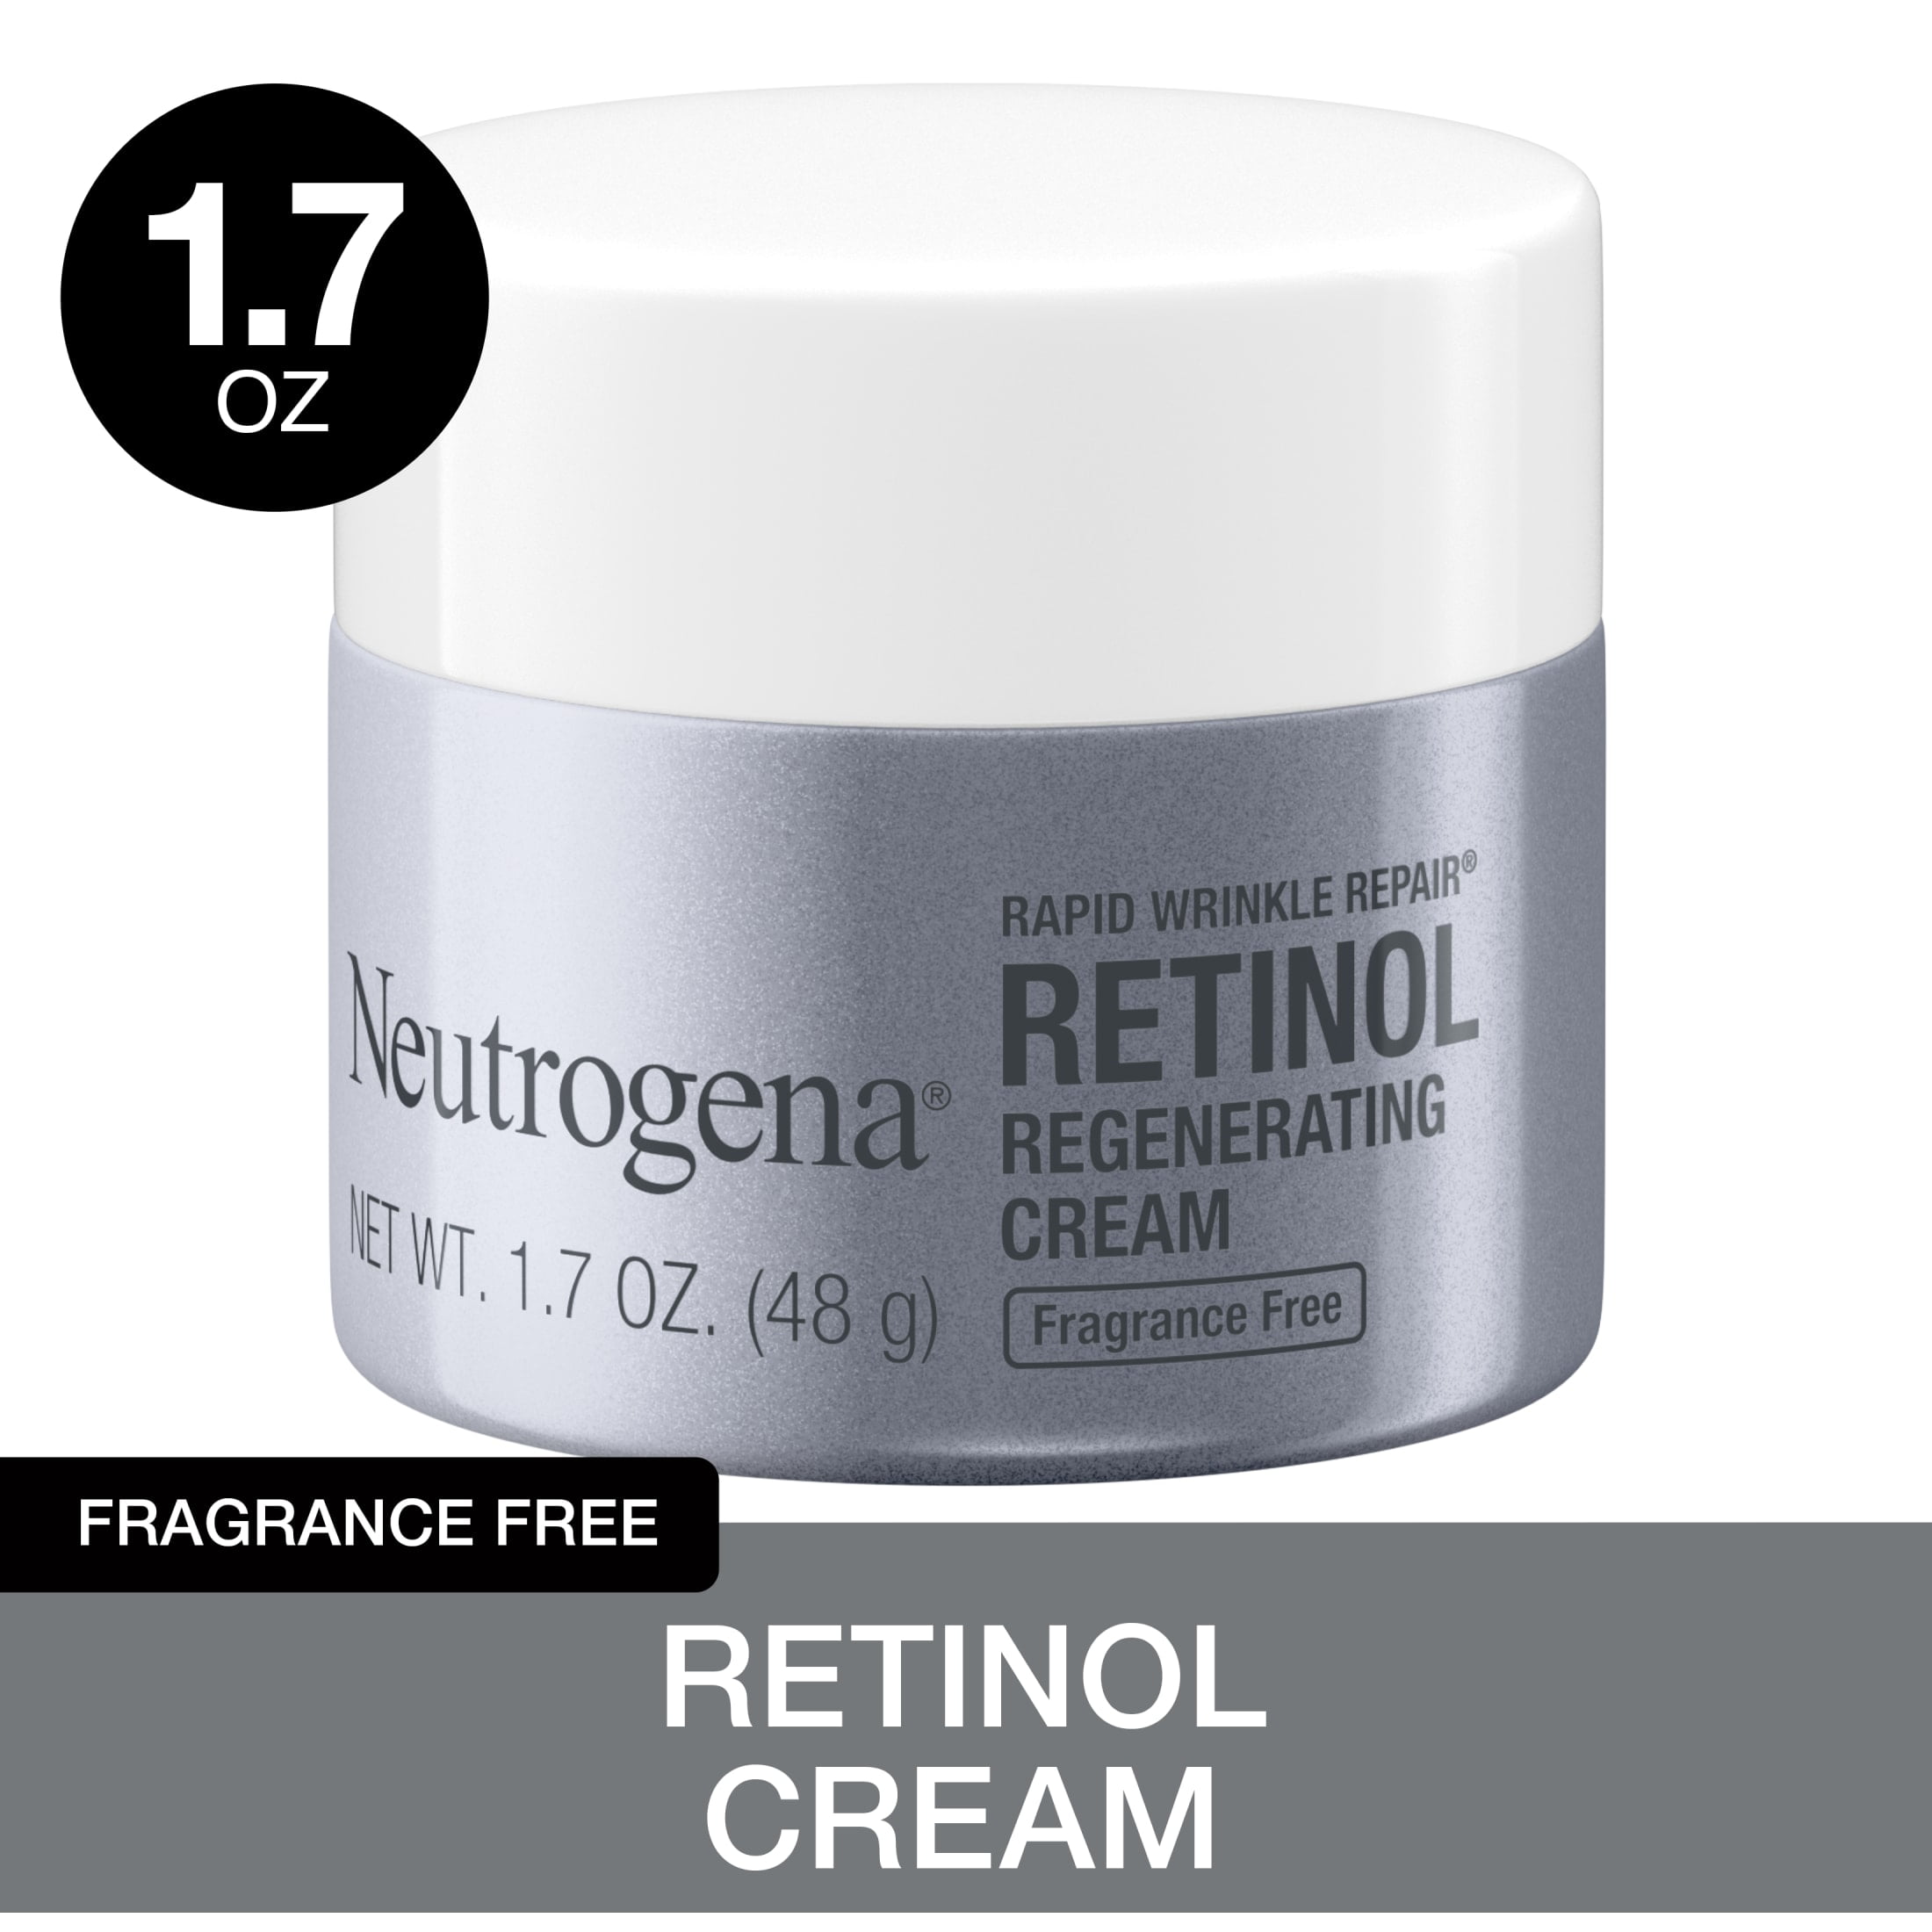 Neutrogena Wrinkle Repair Retinol Face Moisturizer with Hyaluronic Acid, 1.7 oz Walmart.com